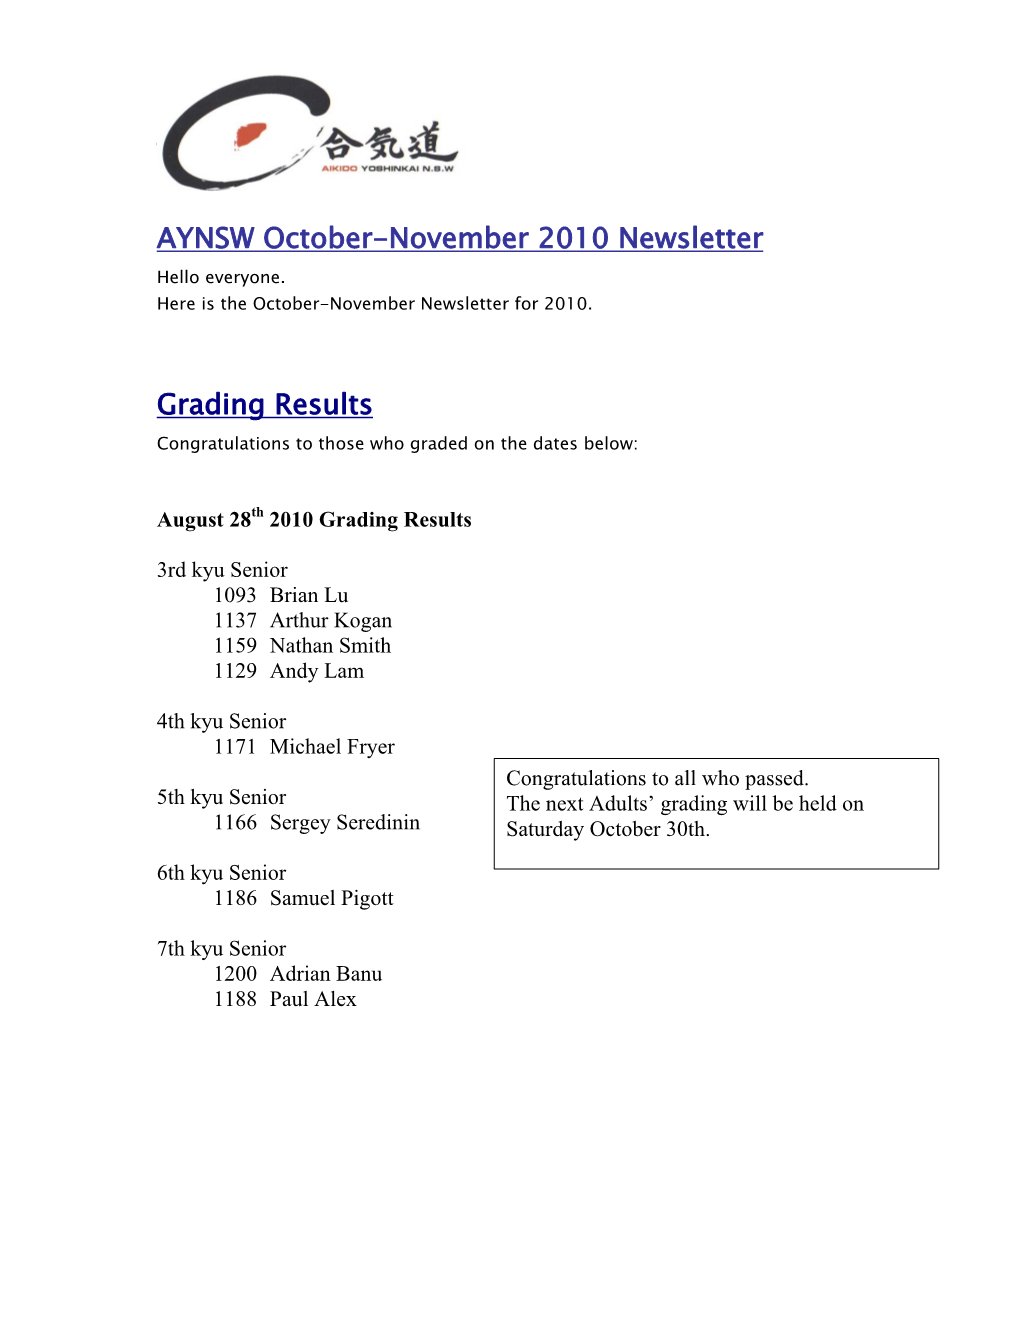 UPDATE AYNSW October-November 2010 Newsletter Grading Results